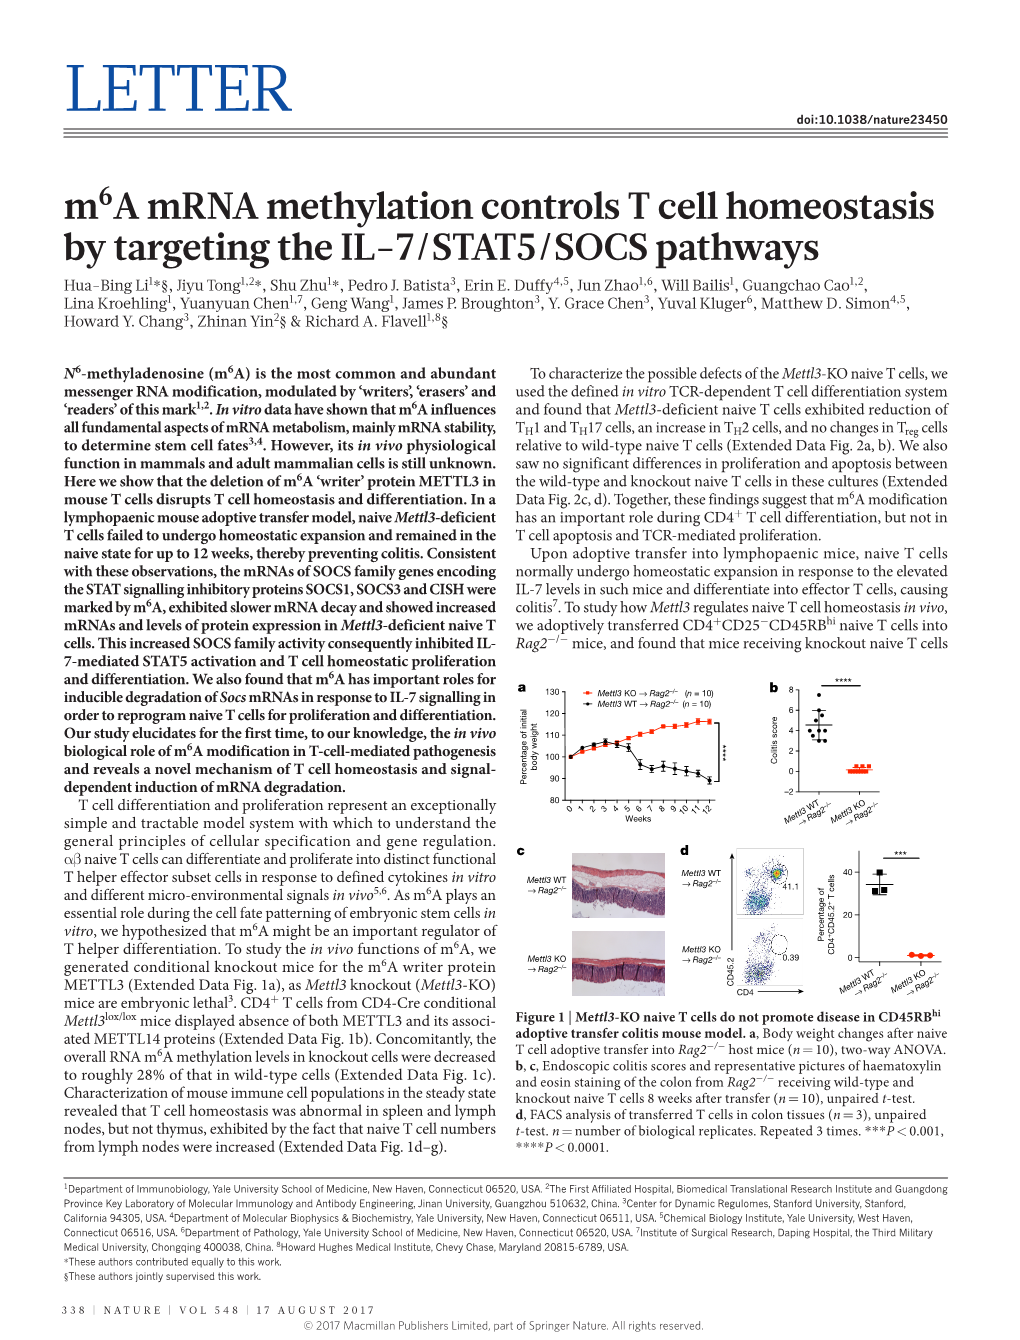 M6a Mrna Methylation Controls T Cell Homeostasis by Targeting the IL-7/STAT5/SOCS Pathways Hua-Bing Li1*§, Jiyu Tong1,2*, Shu Zhu1*, Pedro J